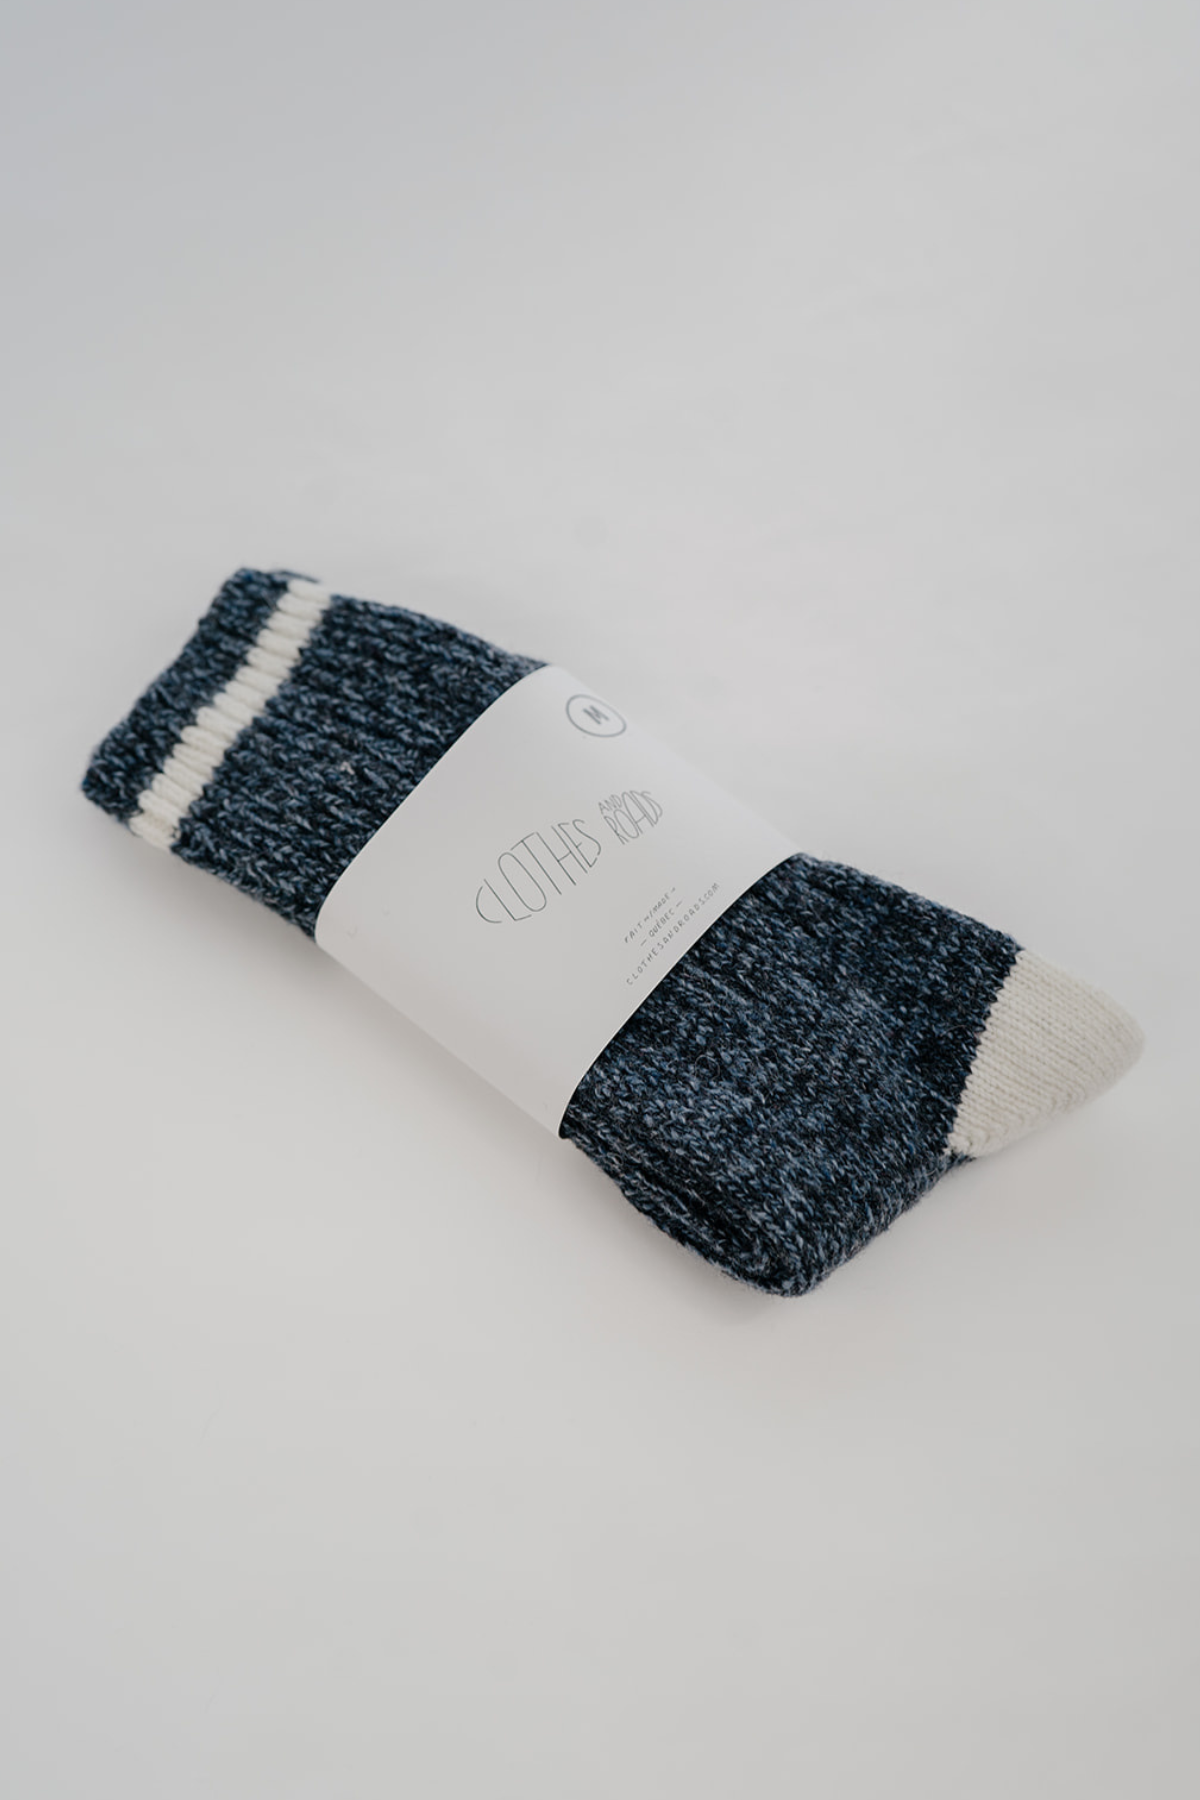 The authentic – Unisex wool socks